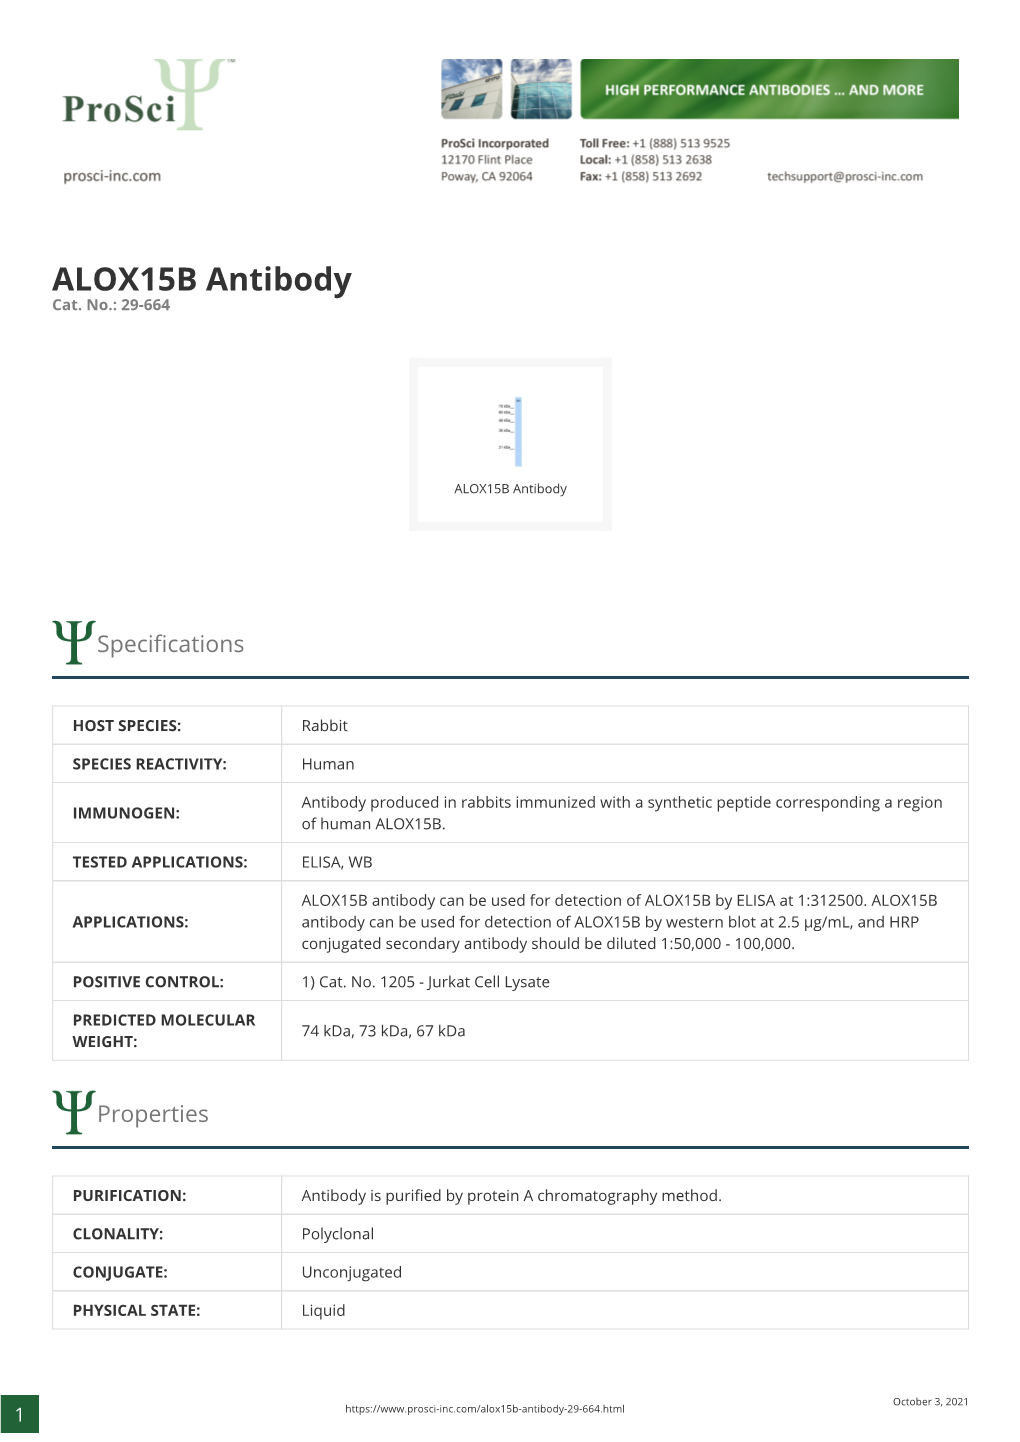 ALOX15B Antibody Cat